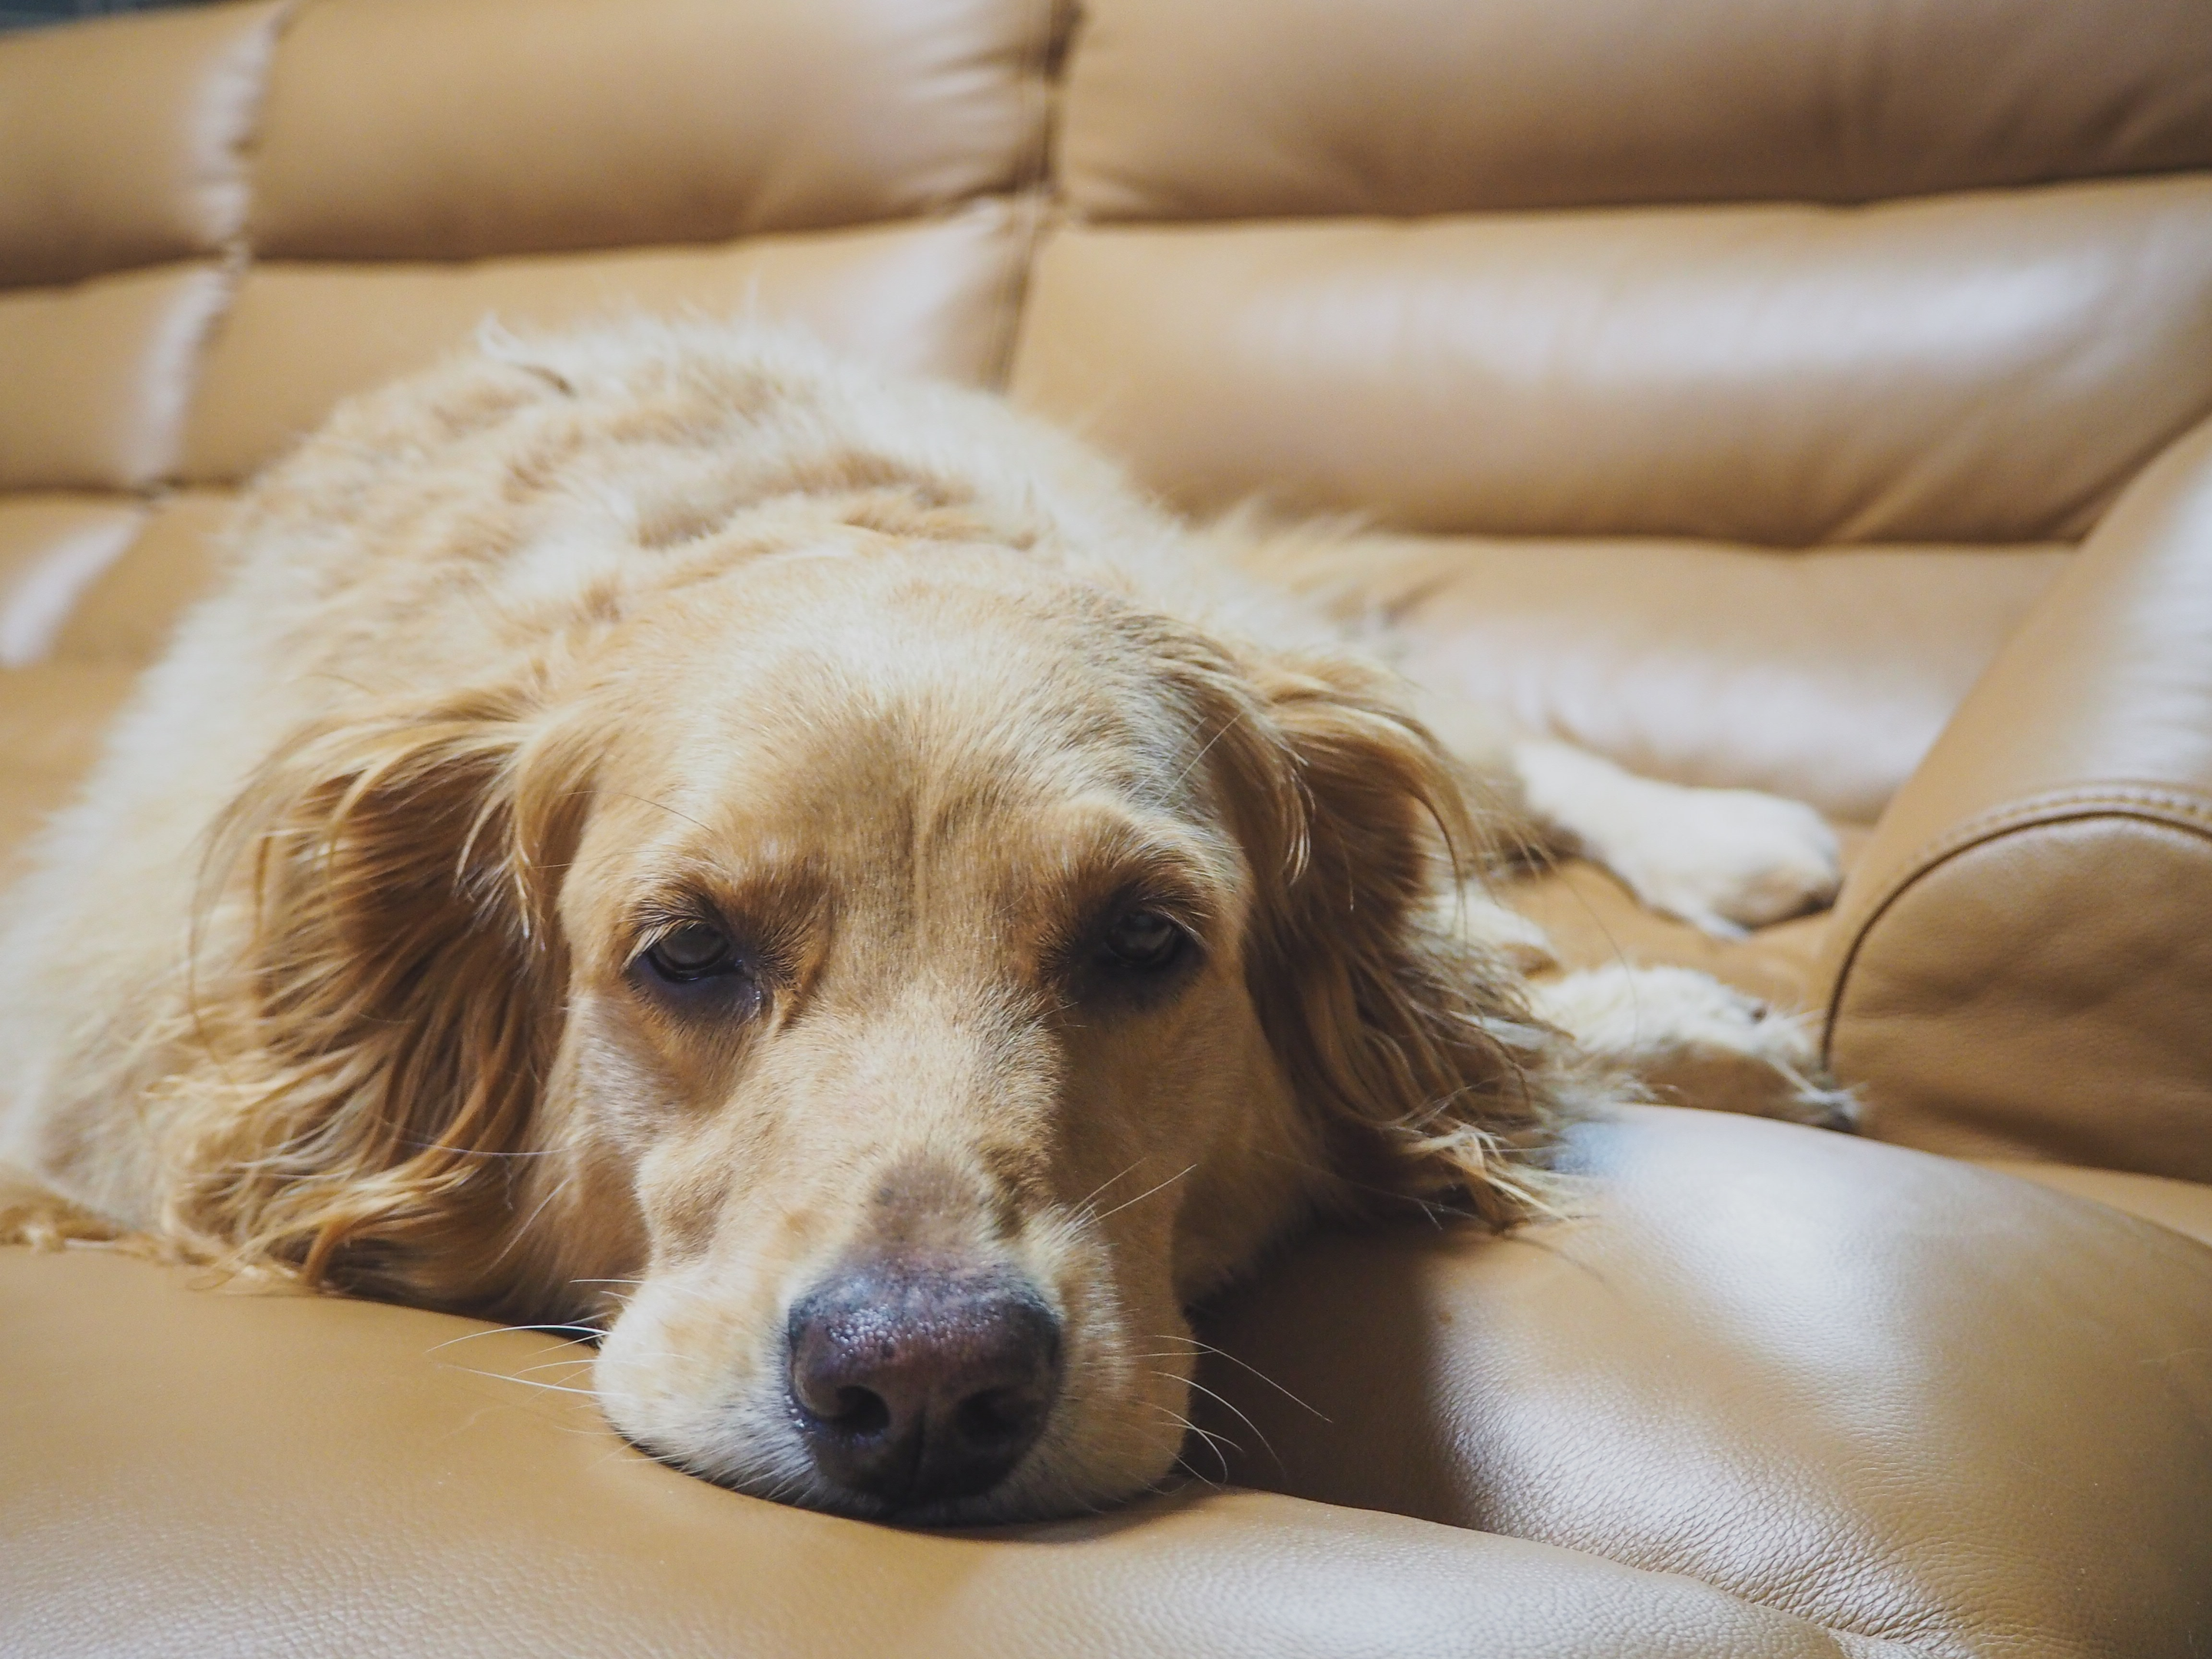 Sleepy-eyed dog resting on a sofa